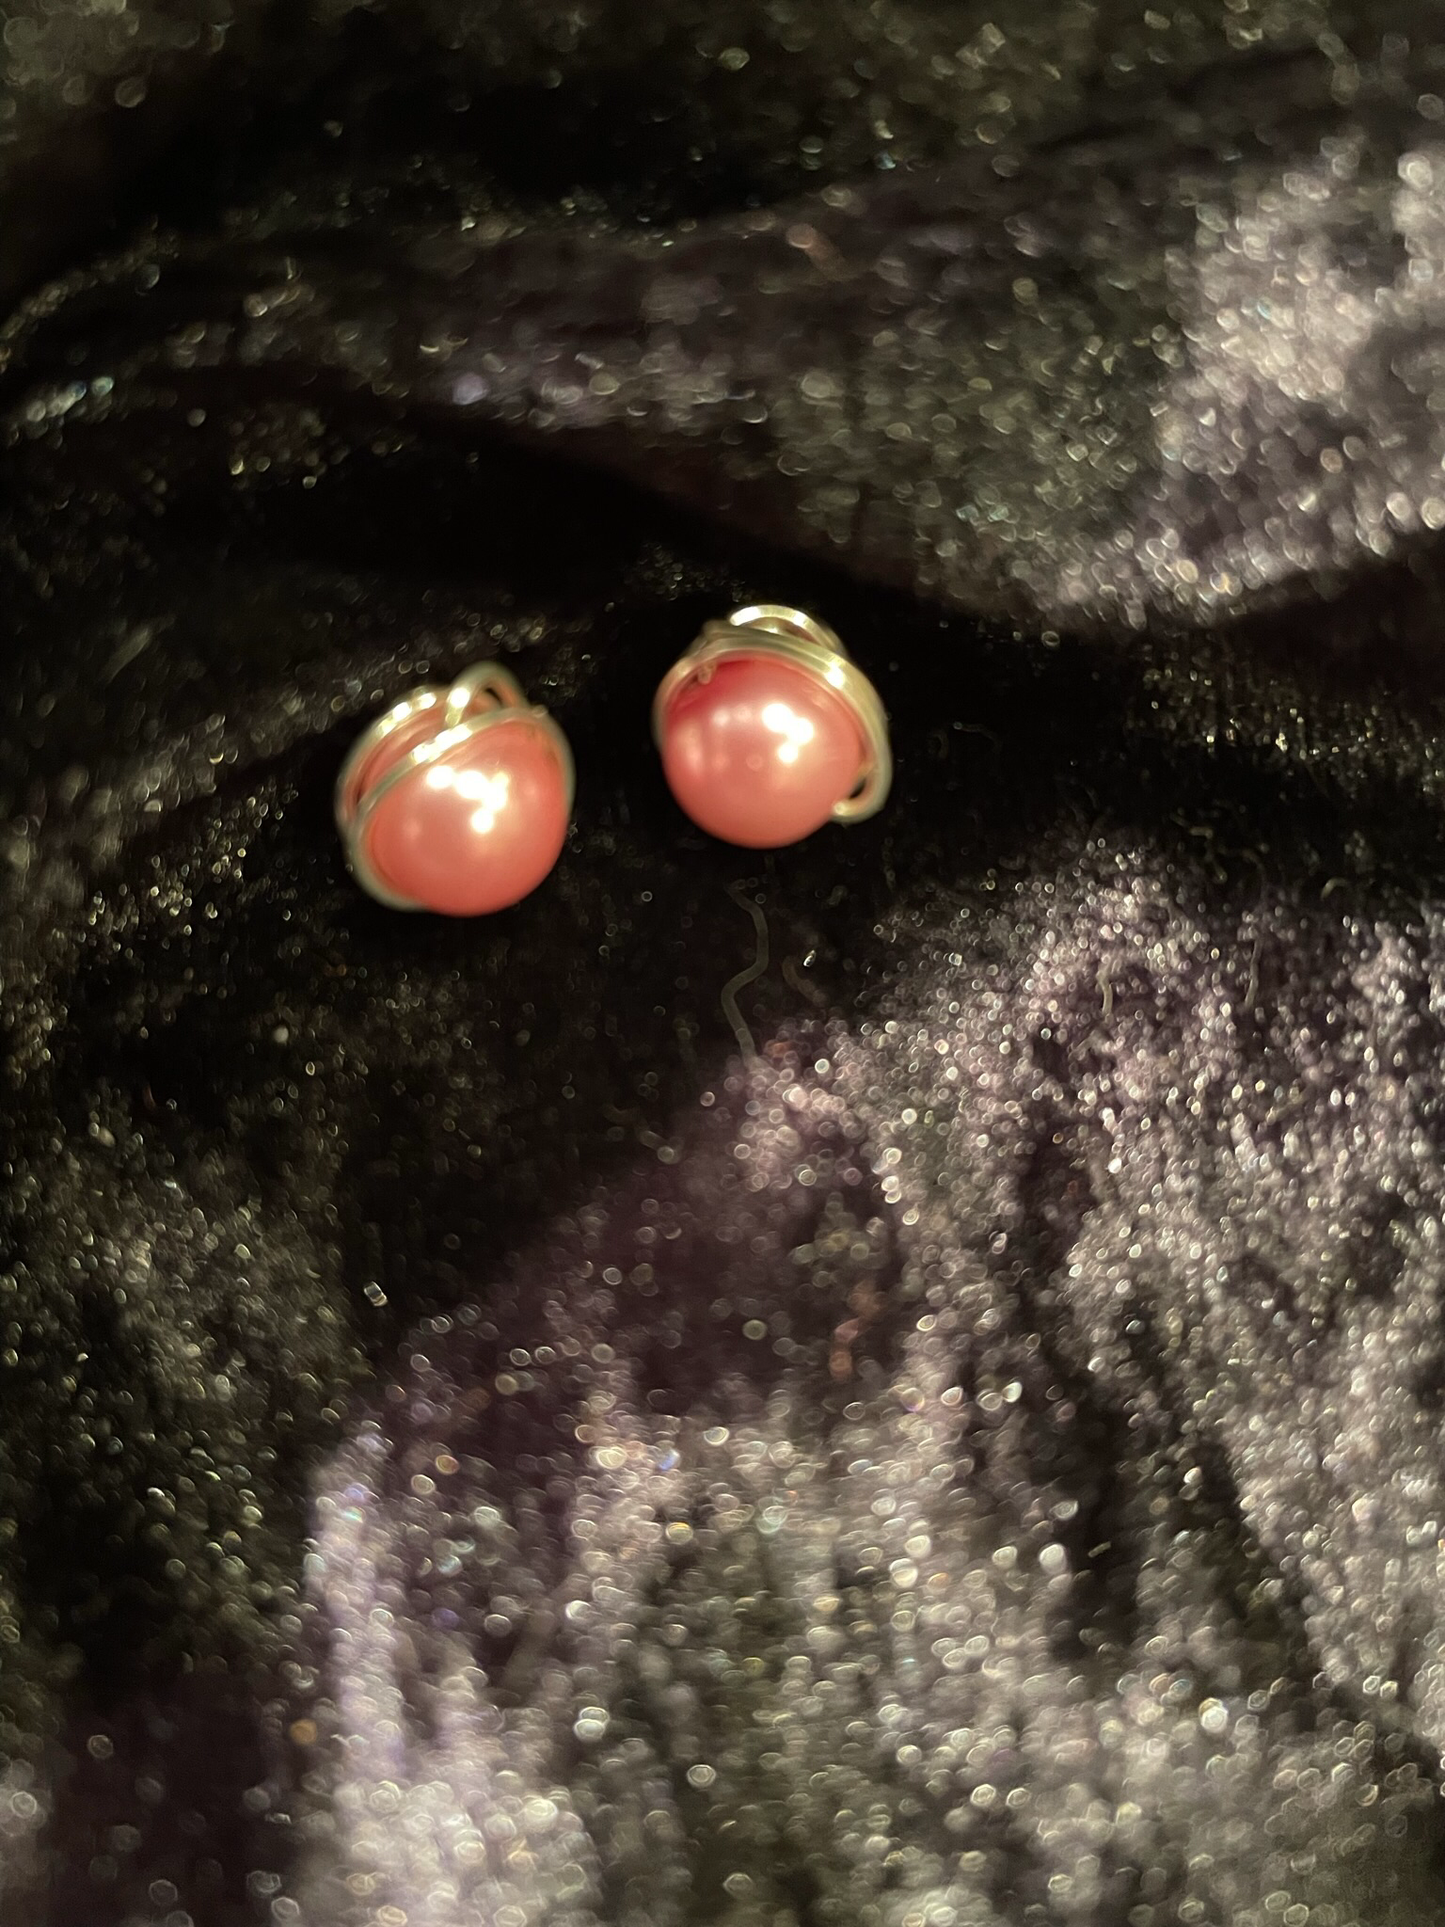 Wire & pink pearl stud earrings